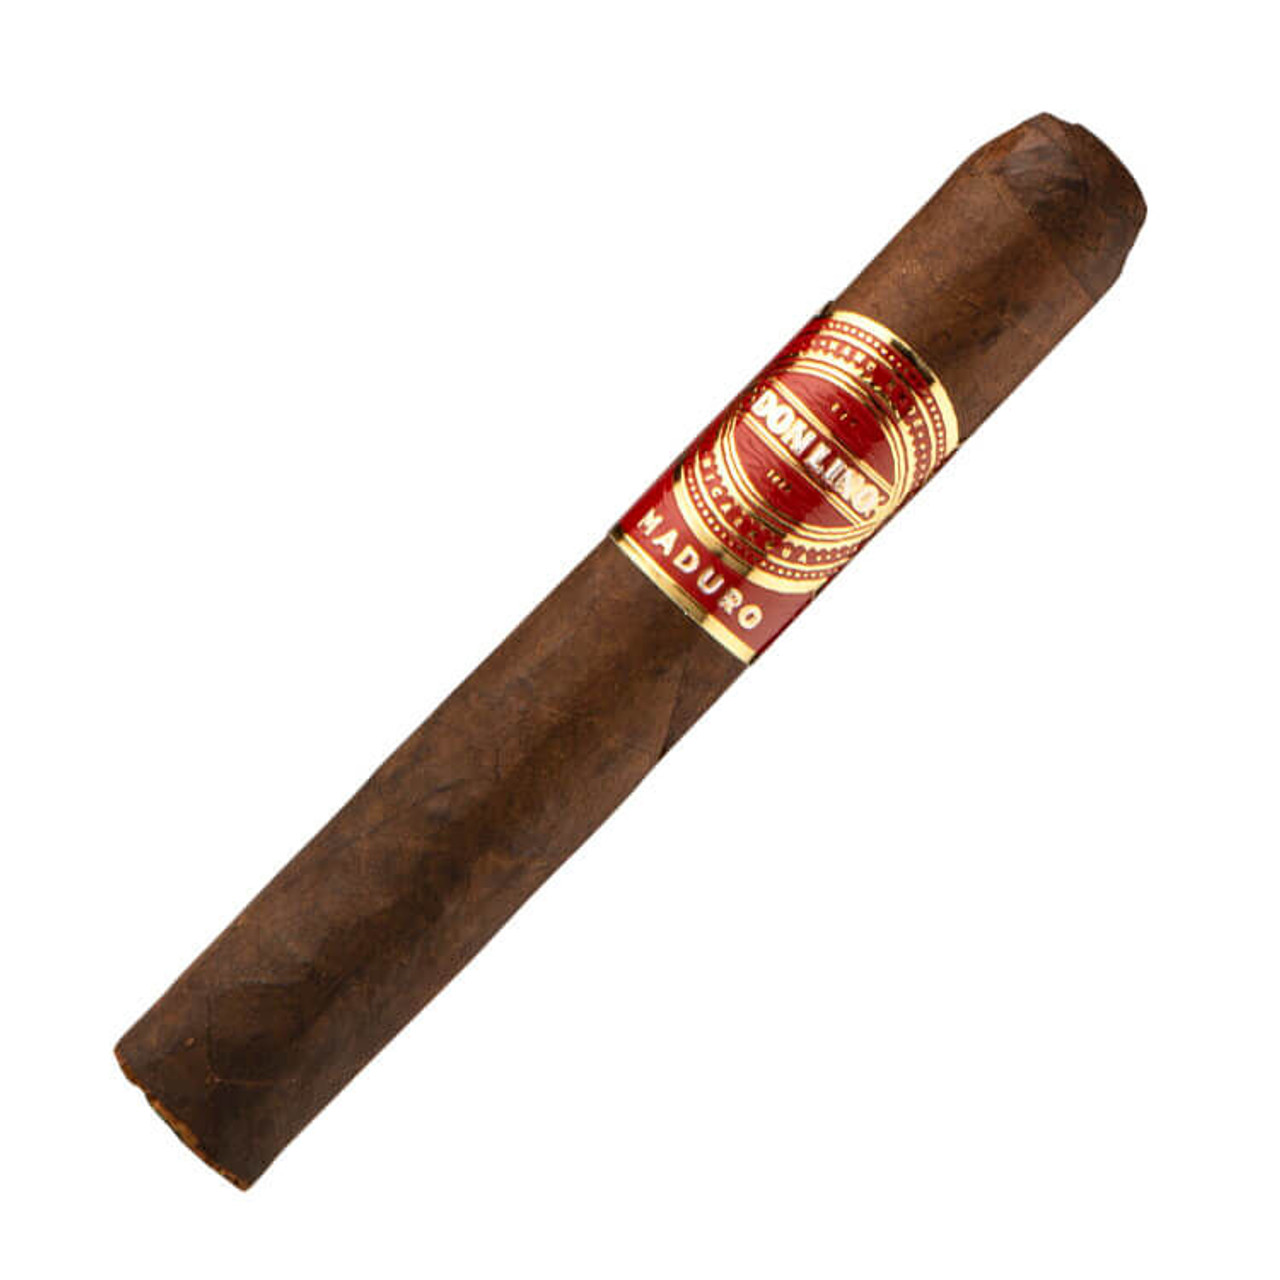 Don Lino Maduro Toro Cigars - 5.5 x 54 Single